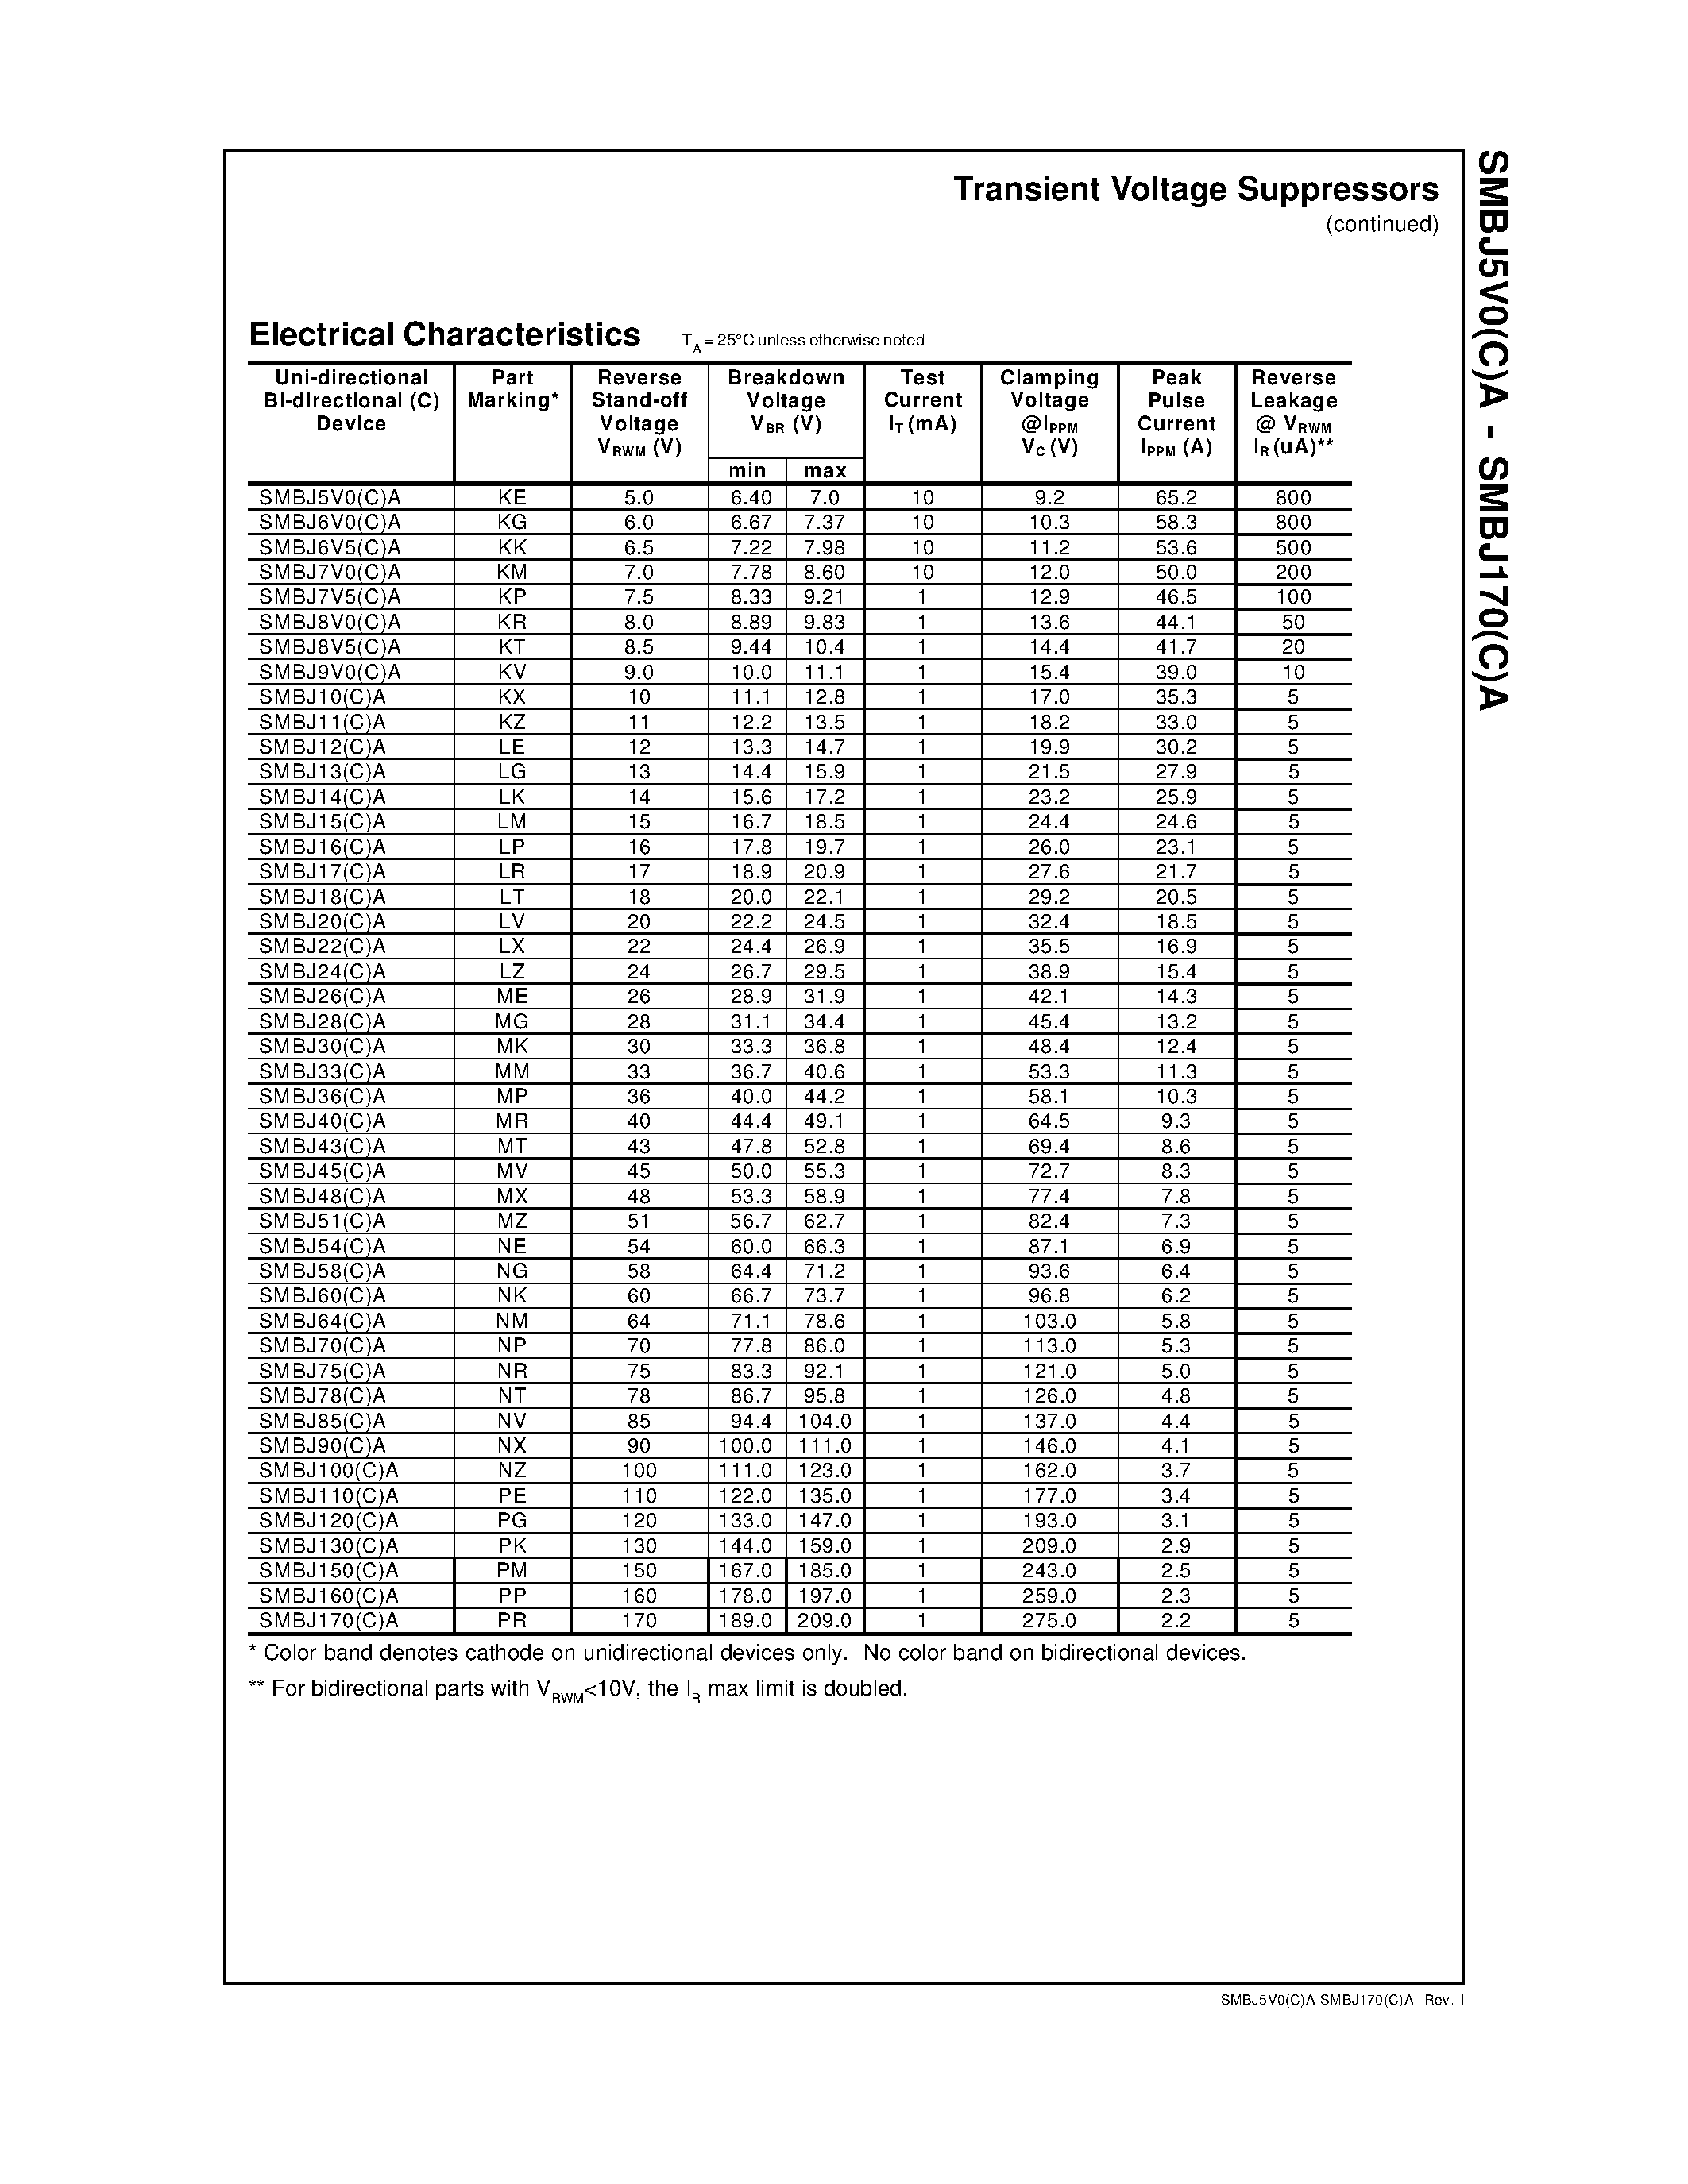 Datasheet SMBJ18A - Transient Voltage Suppressors SMBJ5V0(C)A - SMBJ170(C)A page 2